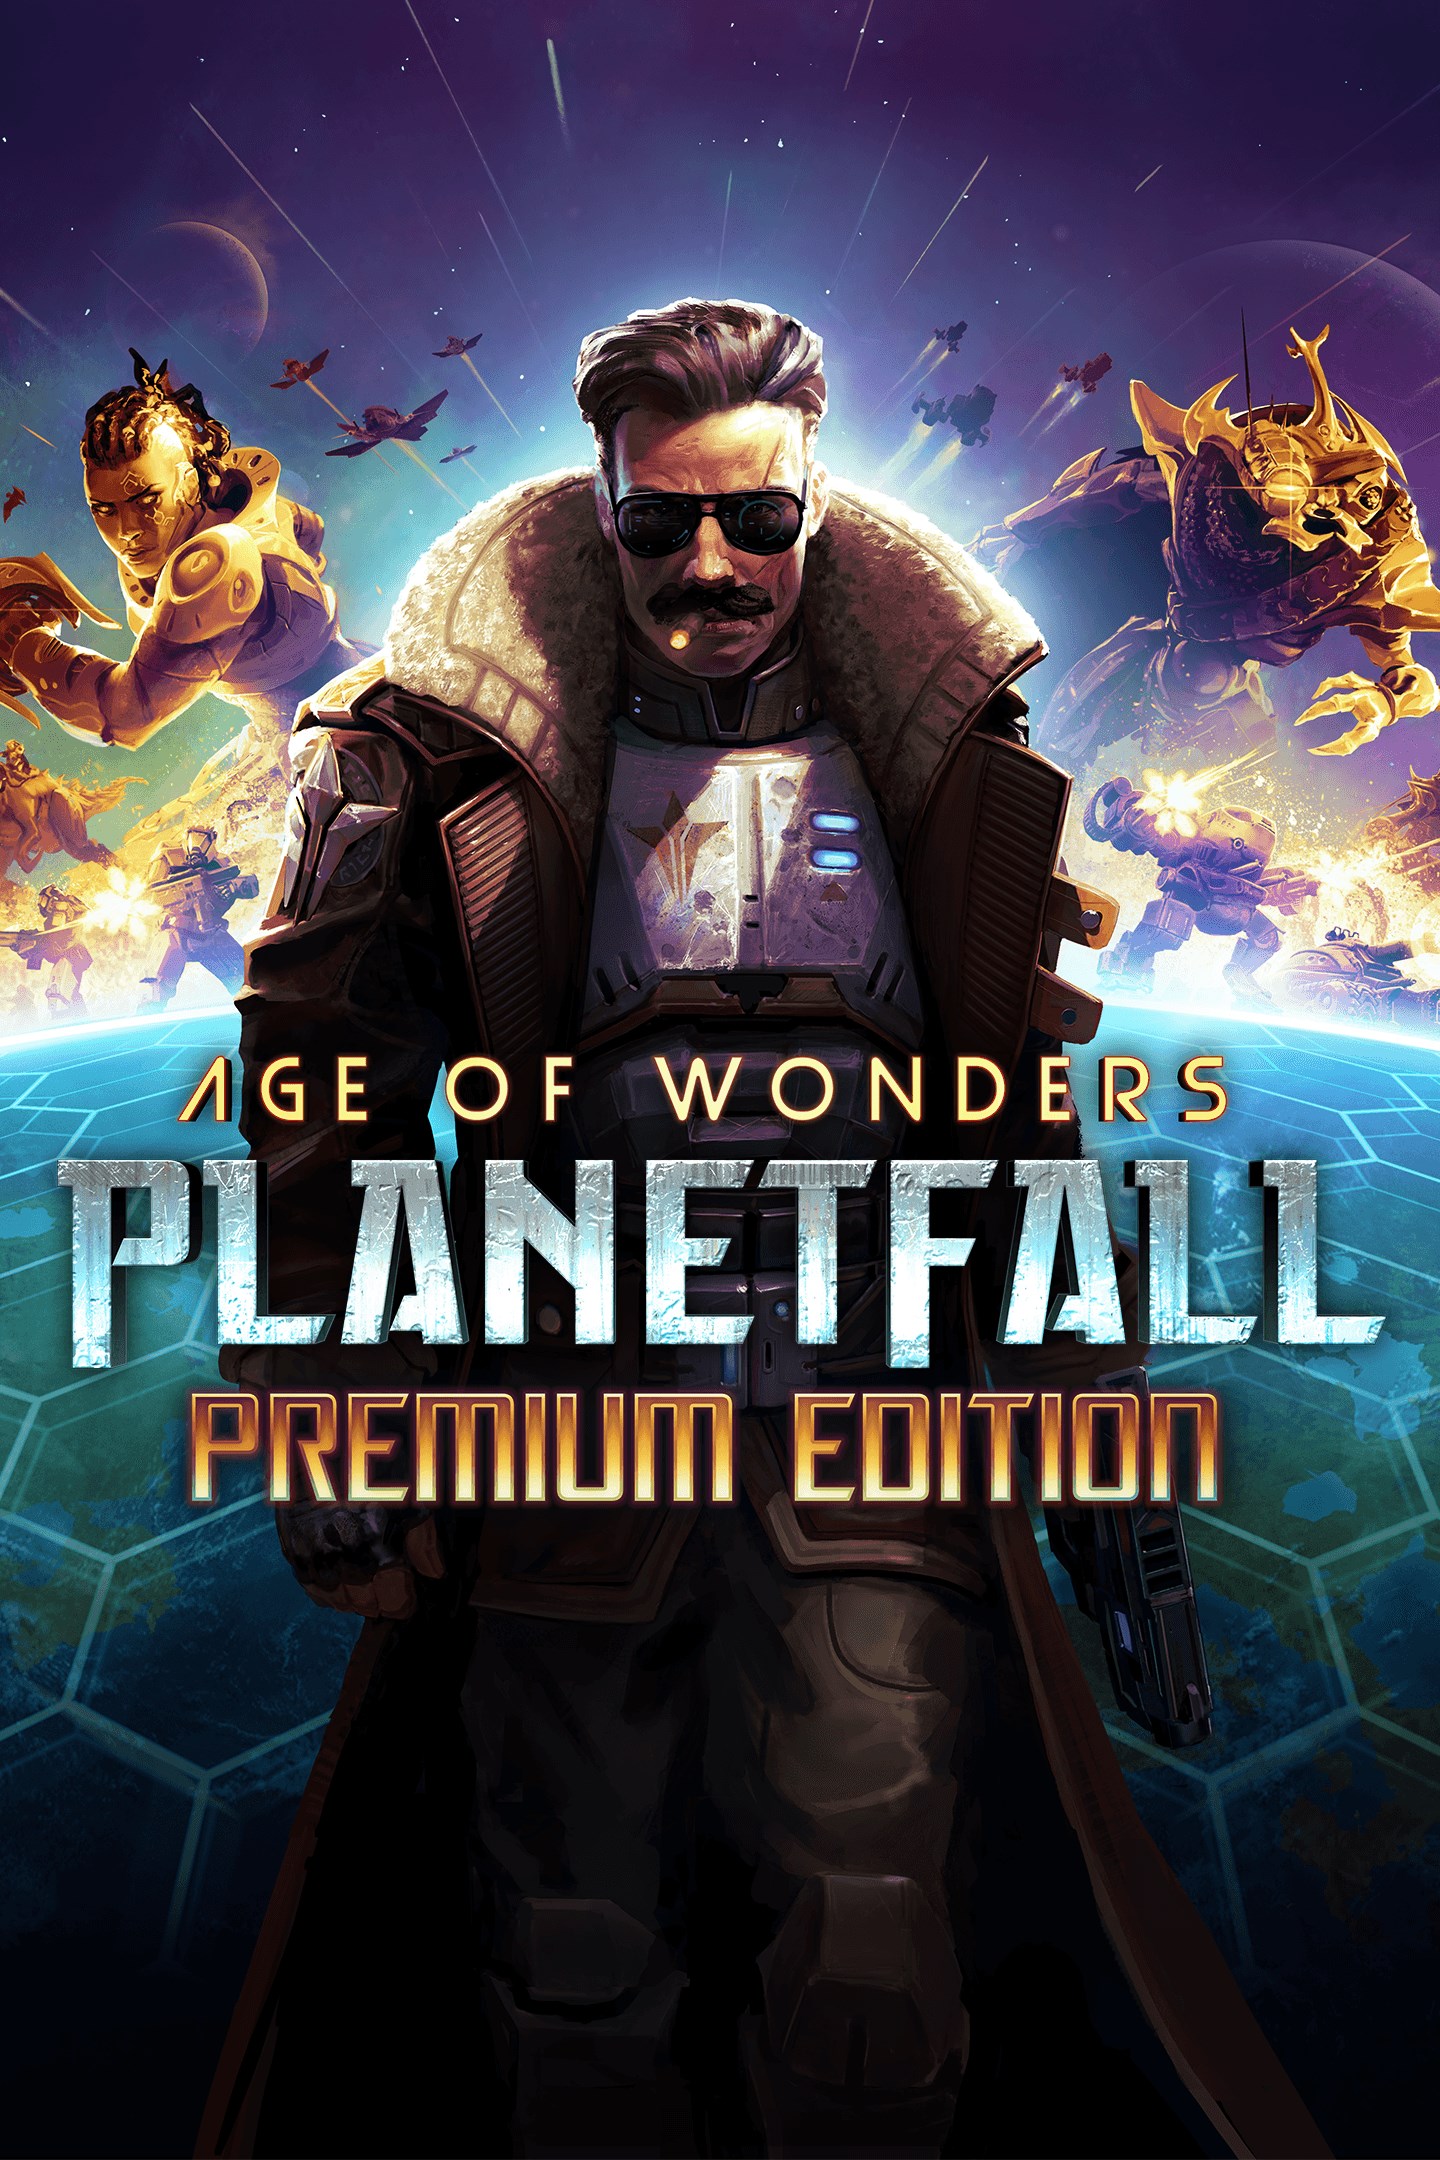 Age Of Wonders Planetfall Premium Edition を購入 Microsoft Store Ja Jp